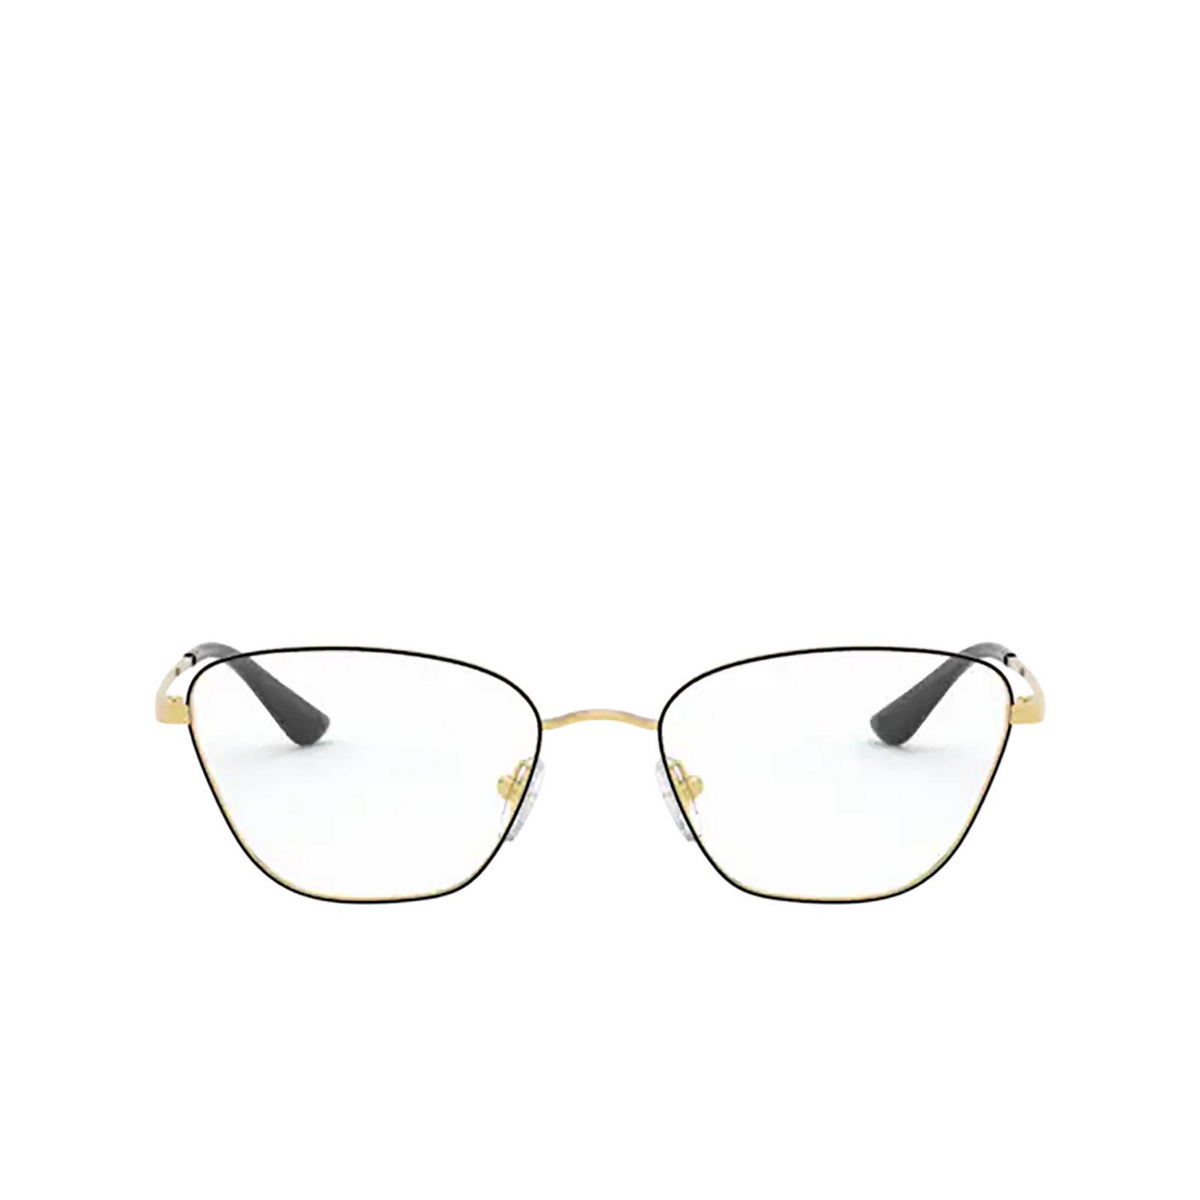 Vogue VO4163 Eyeglasses 280 Top Black / Gold - front view